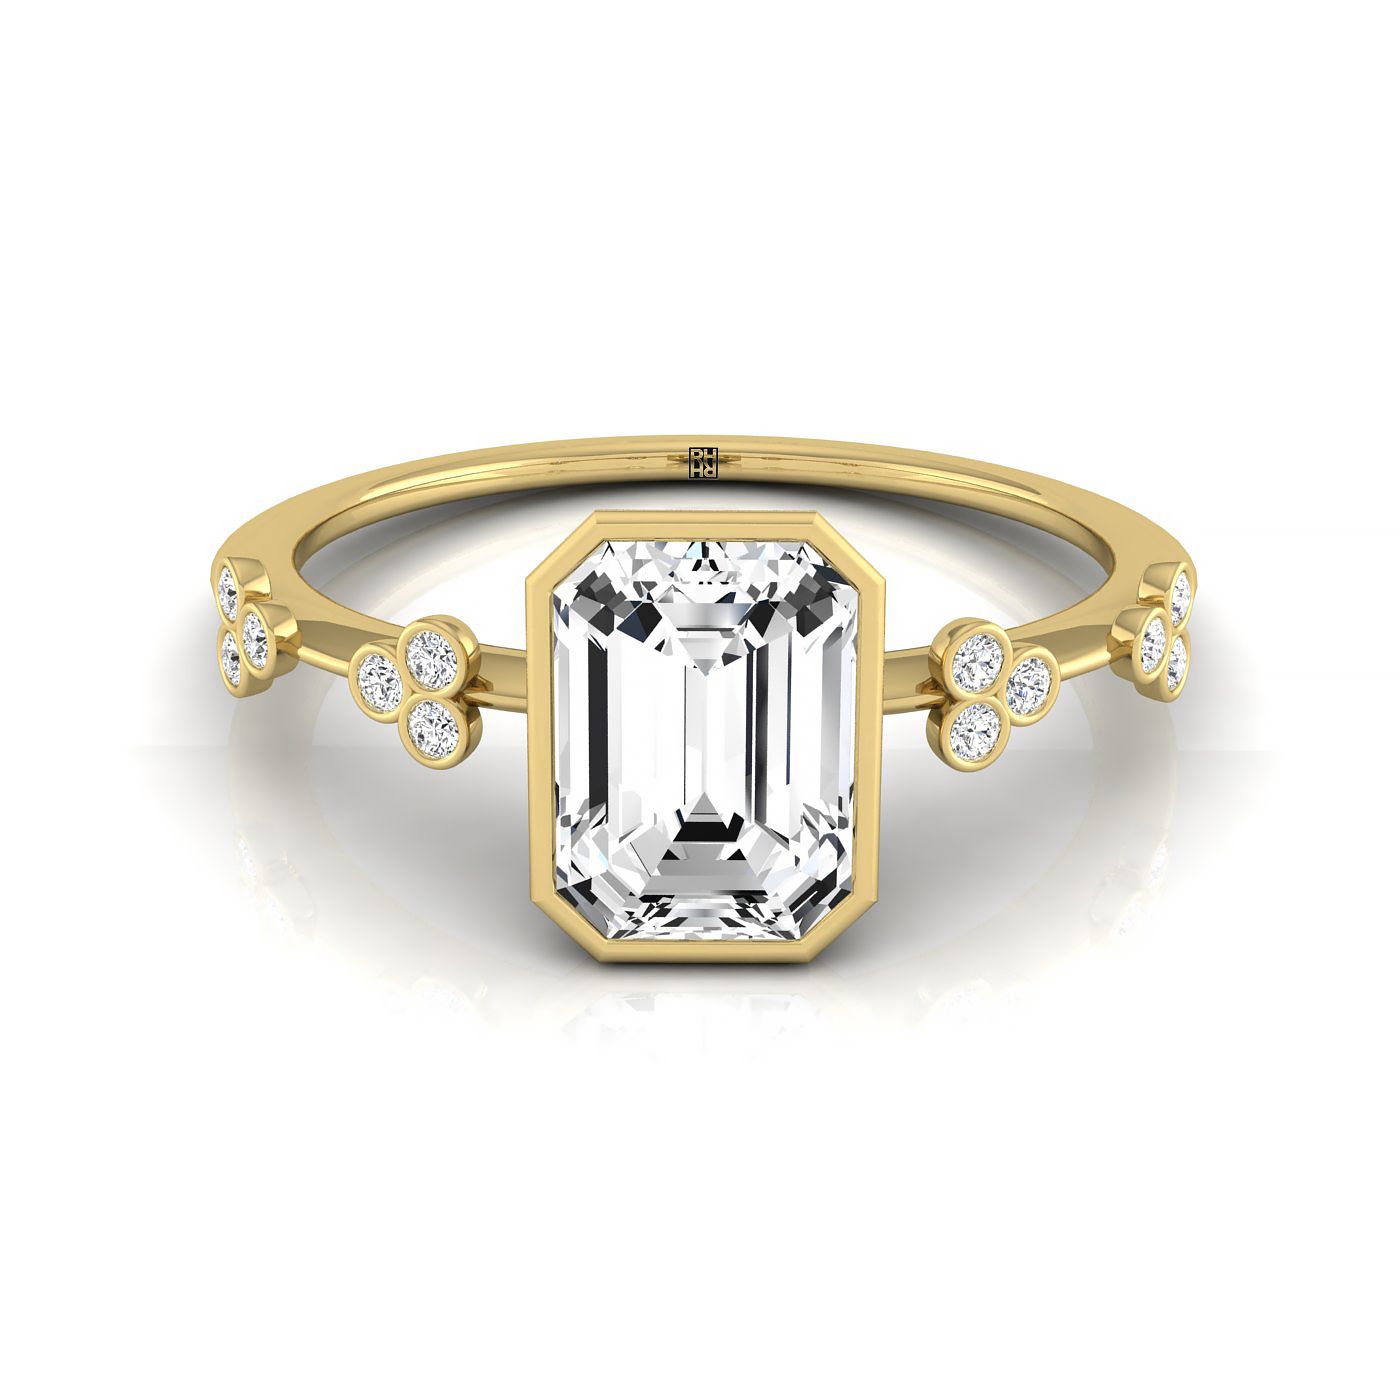 14ky Bezel Set Emerald Engagement Ring With 12 Clover Bezel Set Round Diamonds On Shank